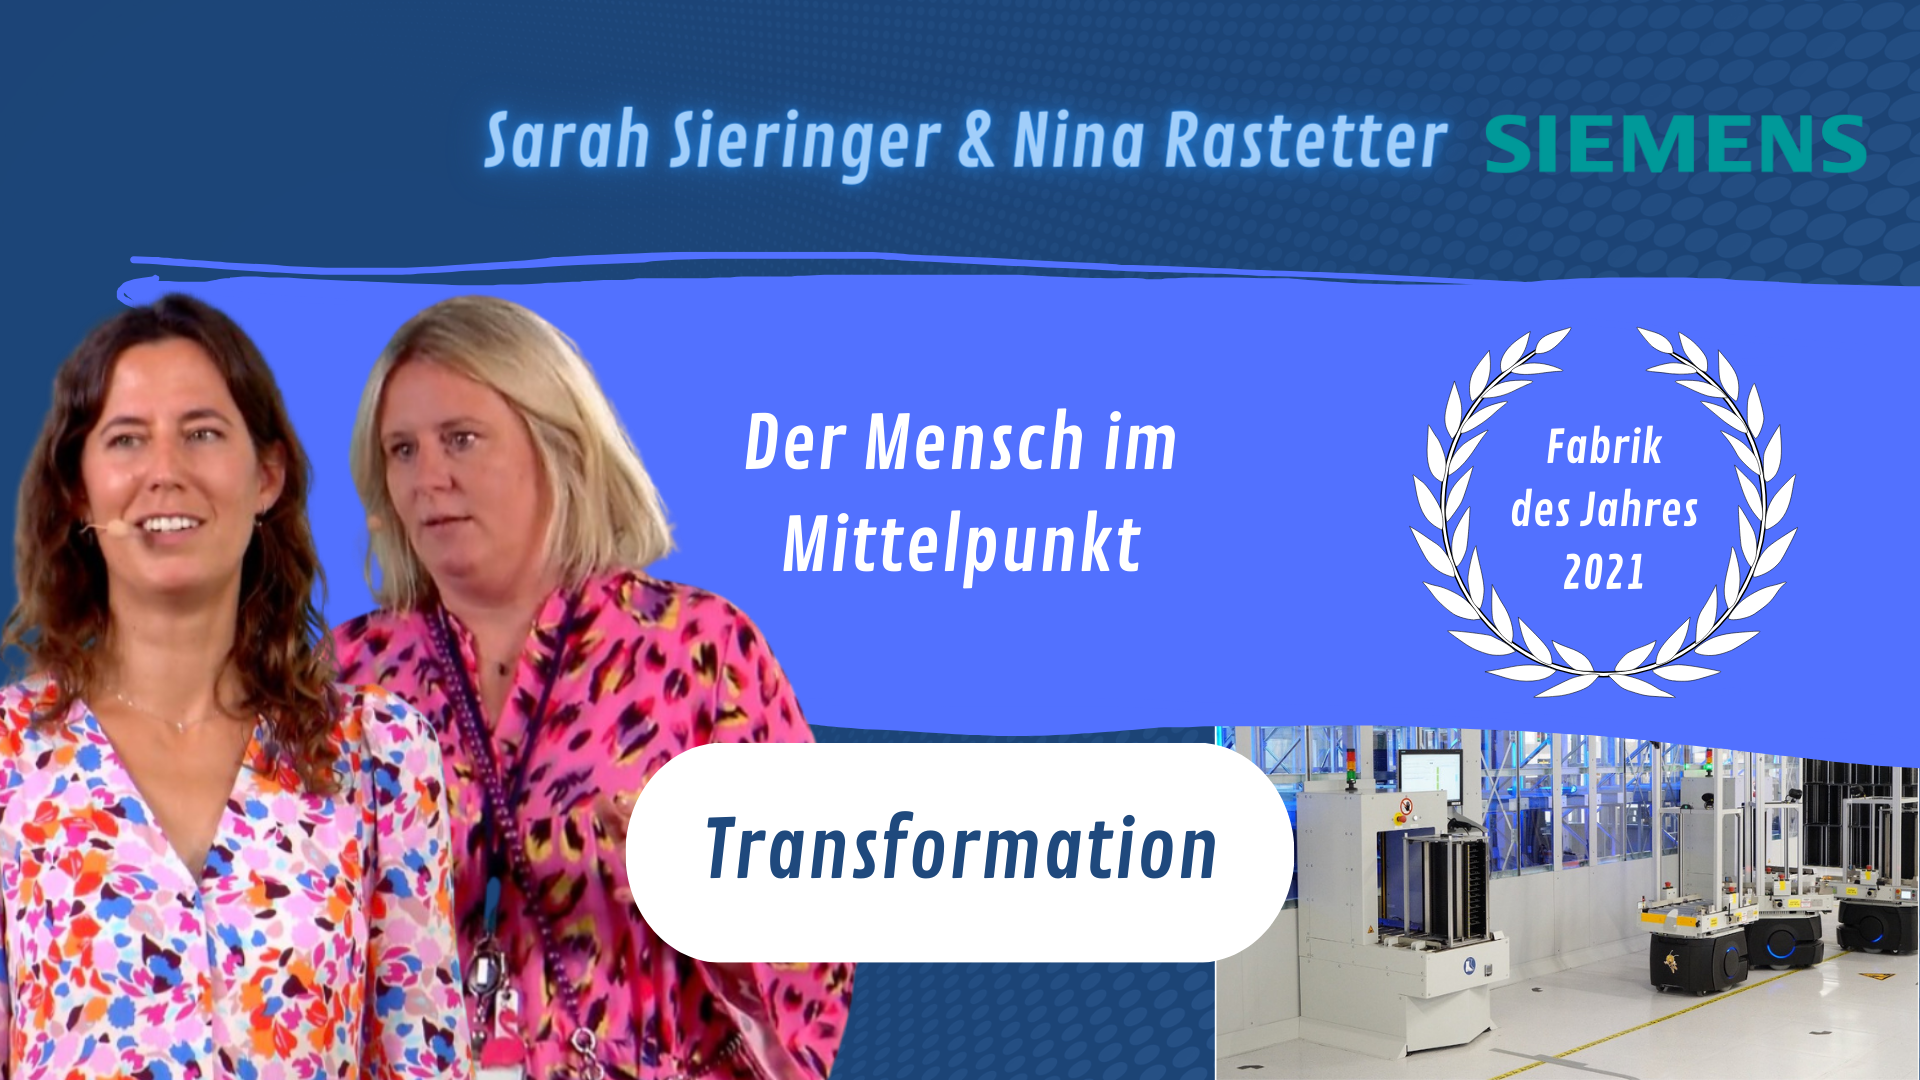 LEAN - Transformation with Sarah Sieringer & Nina Rastetter